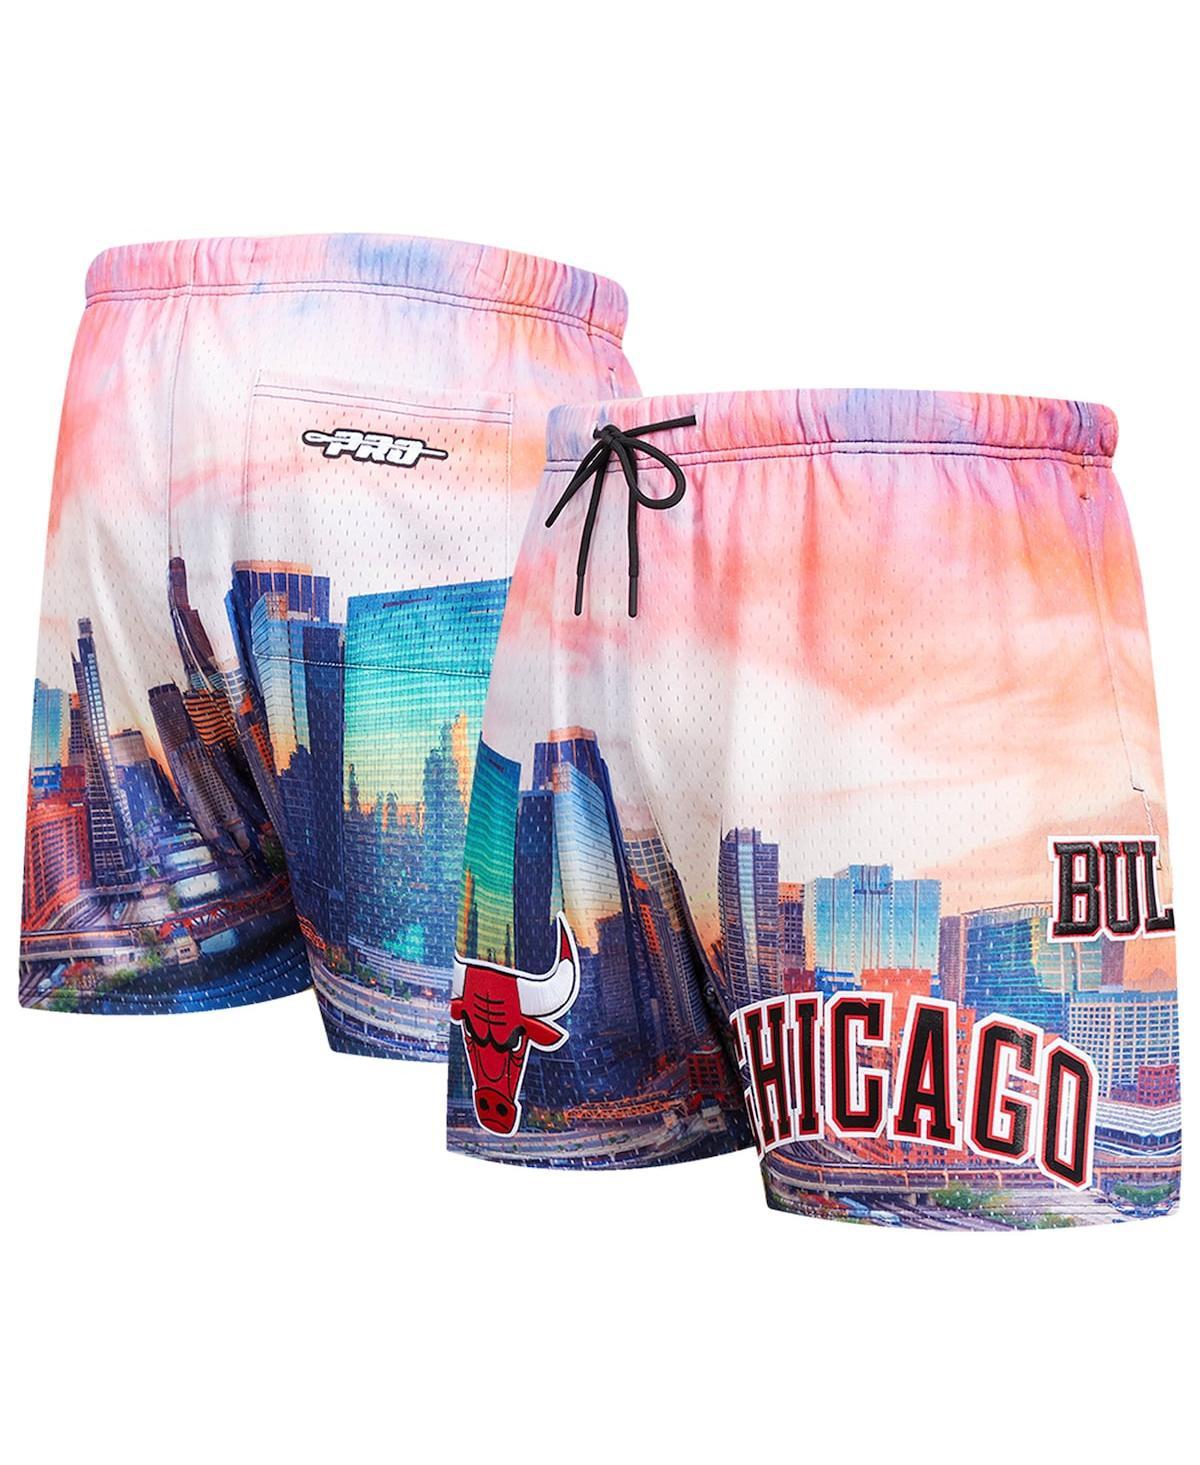 Lonzo Ball Chicago Bulls Pro Standard Player Replica Shorts - Black